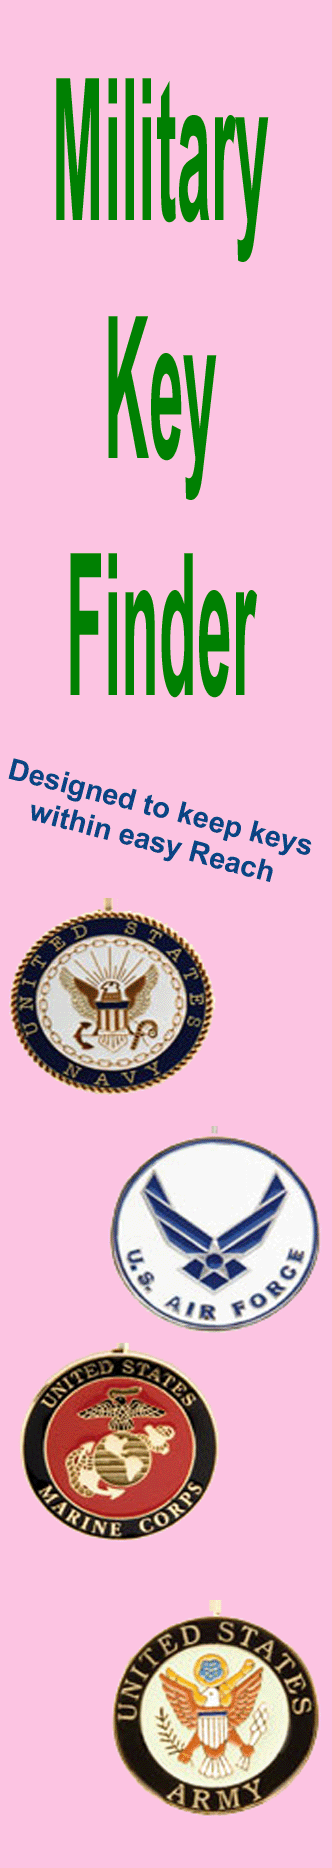 Military Key Finder